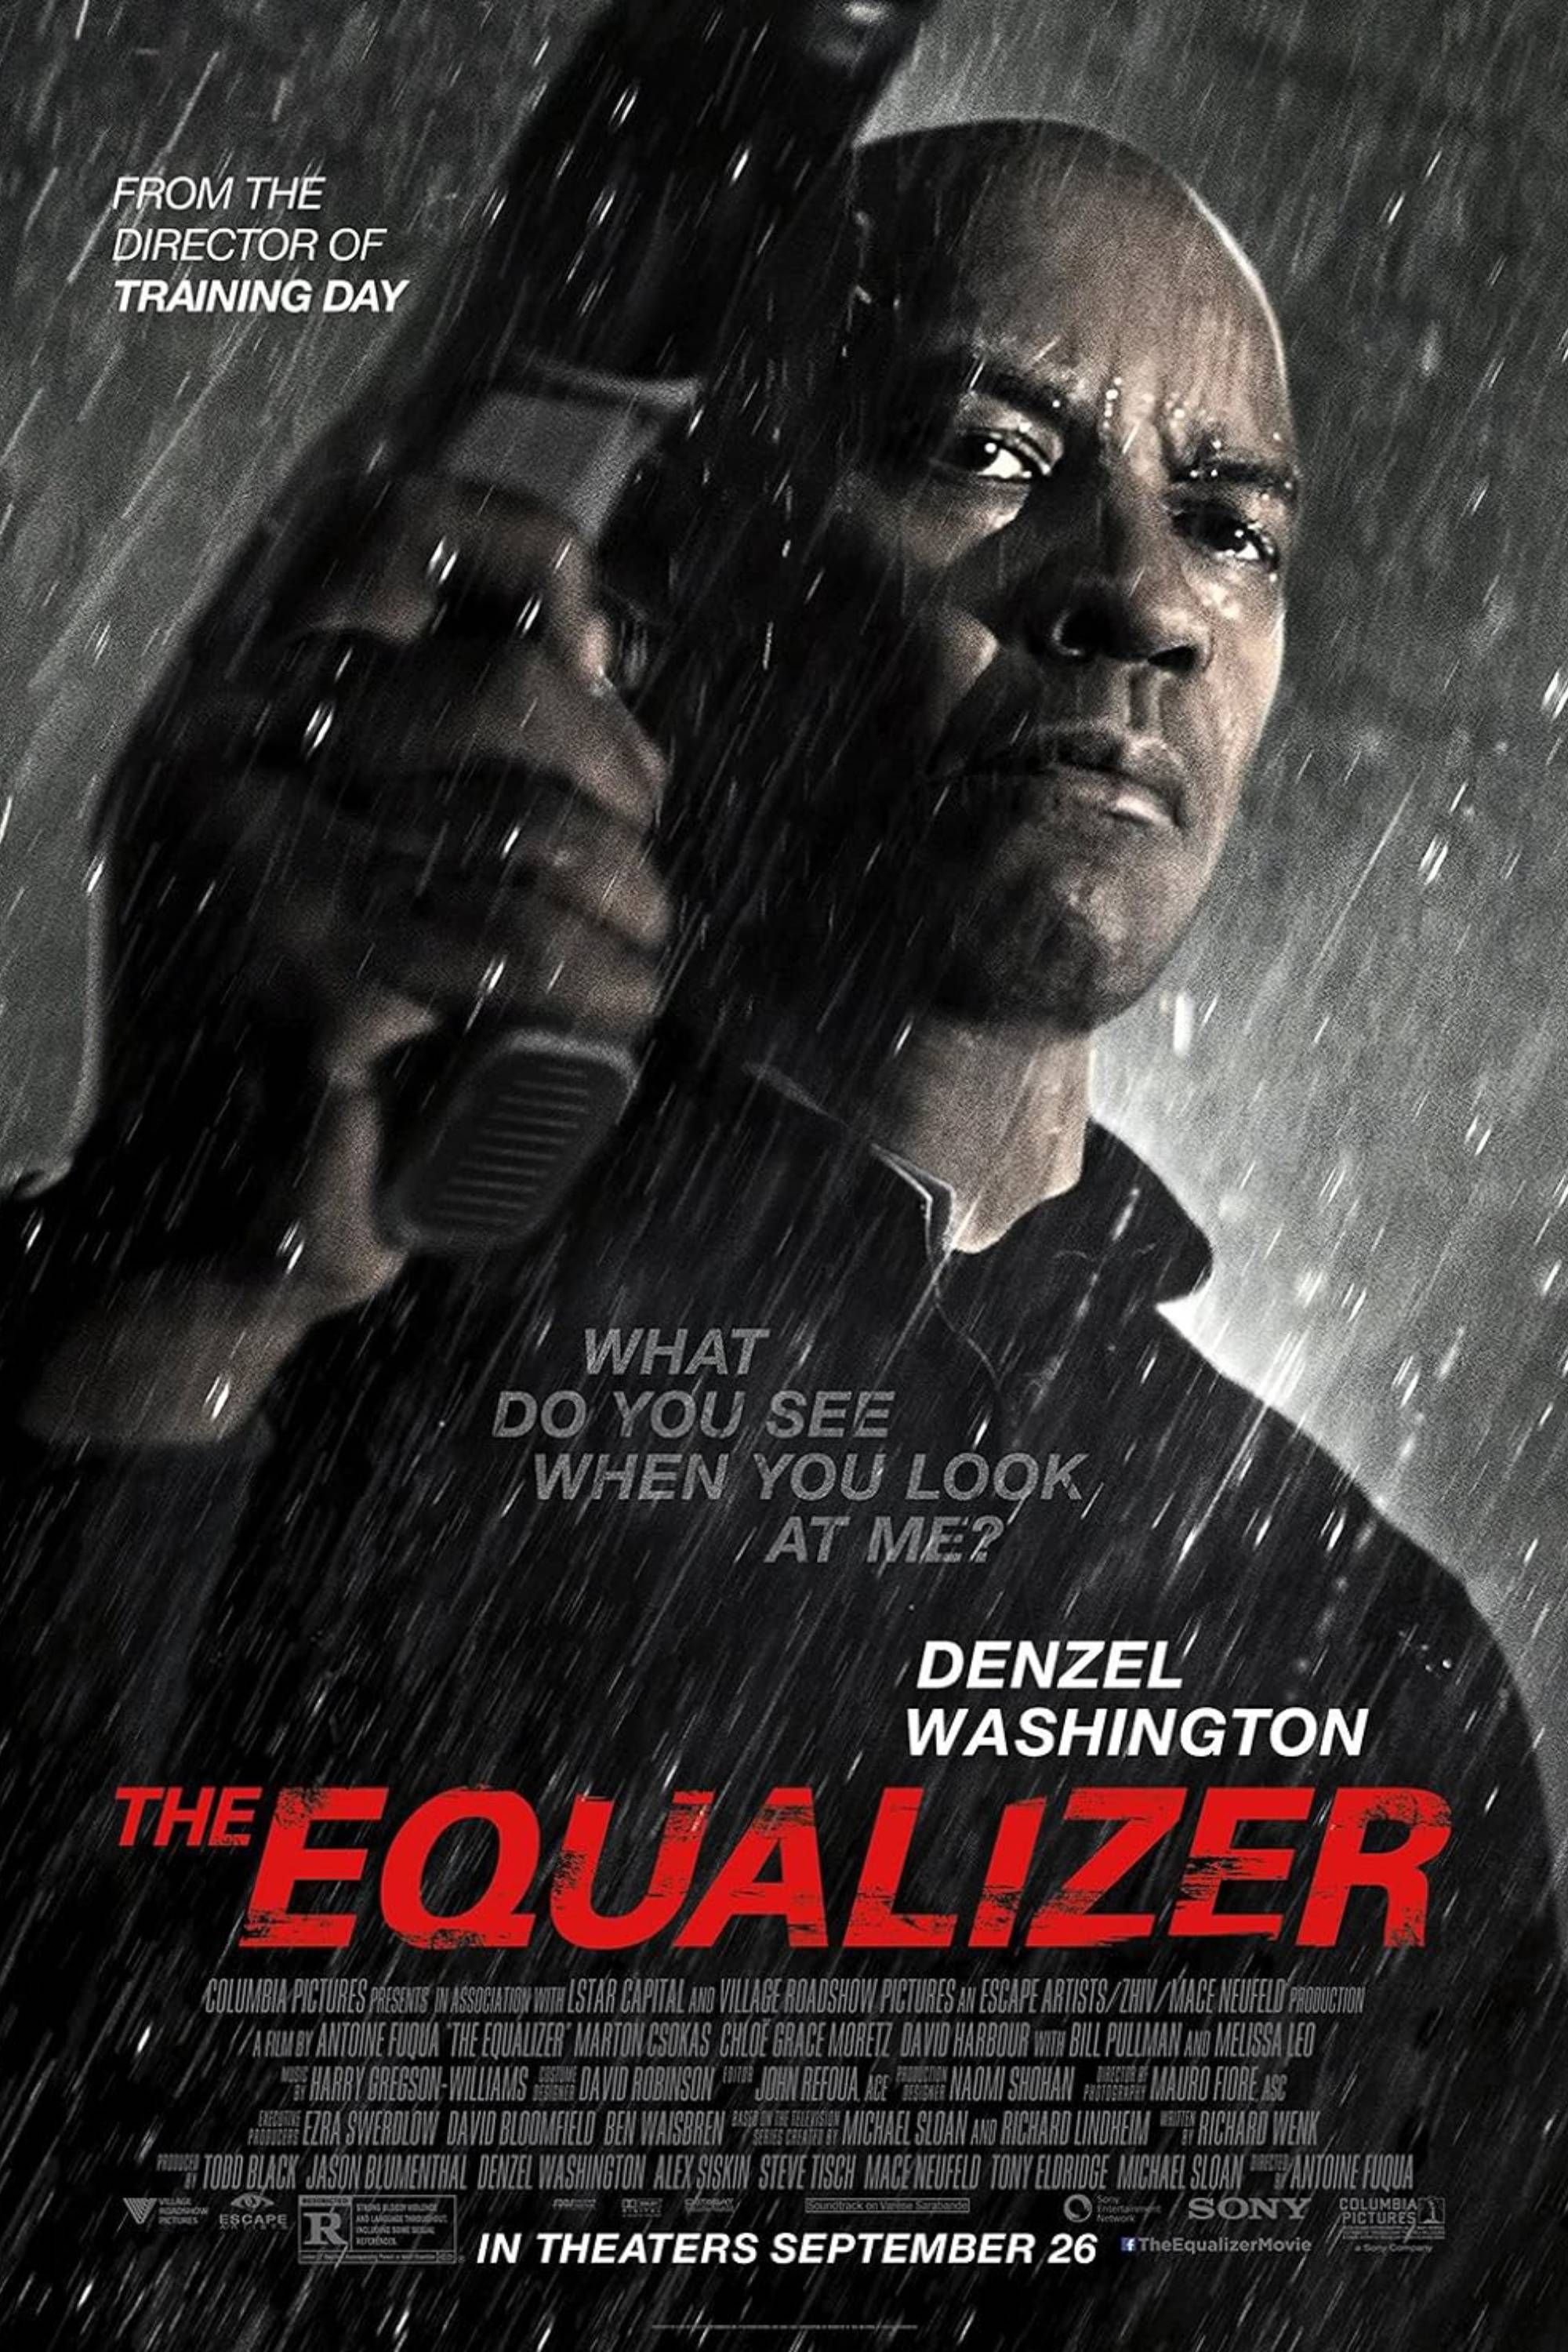 The Equalizer (2014) – Poster – Denzel Washington with a gun